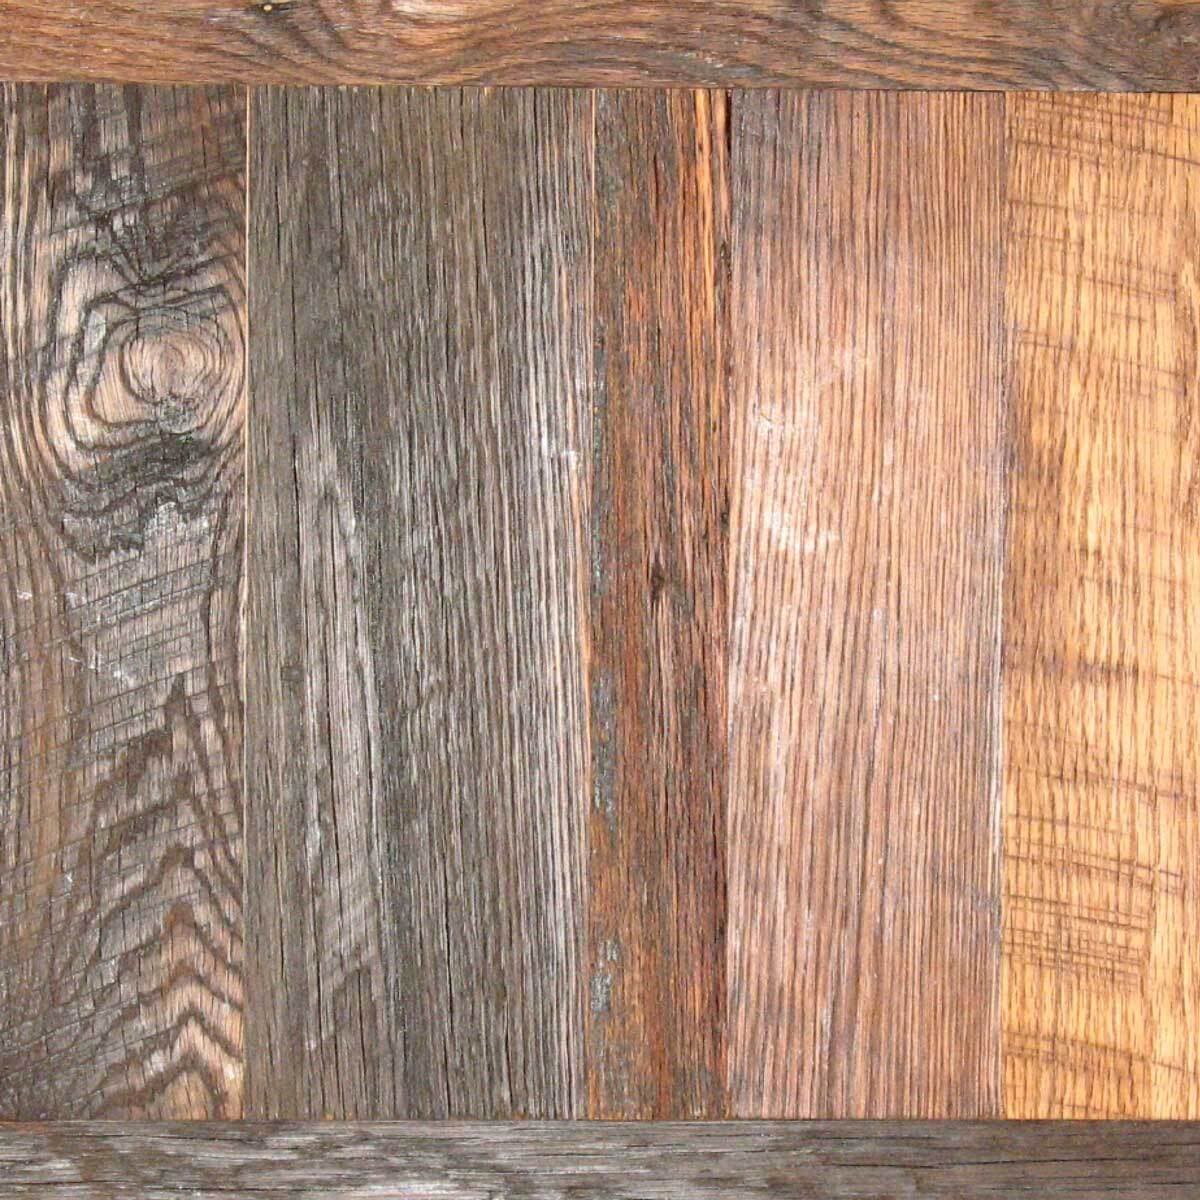 Rhode Island Brown Character Oak wood finish by whole log lumber